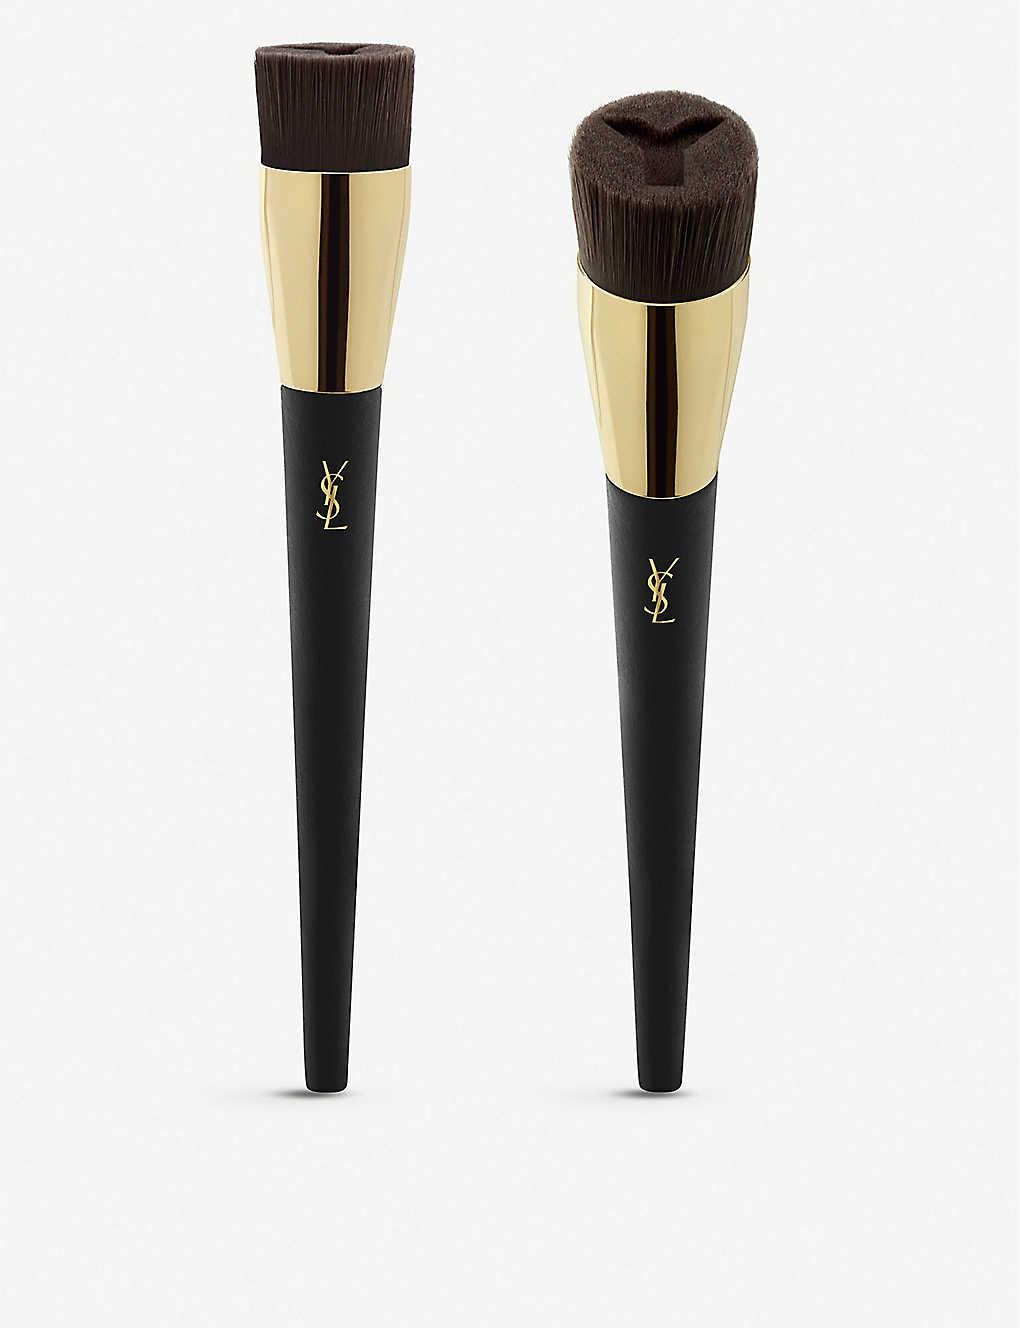 Yves Saint Laurent Touche Eclat Foundation Y-Brush No.3